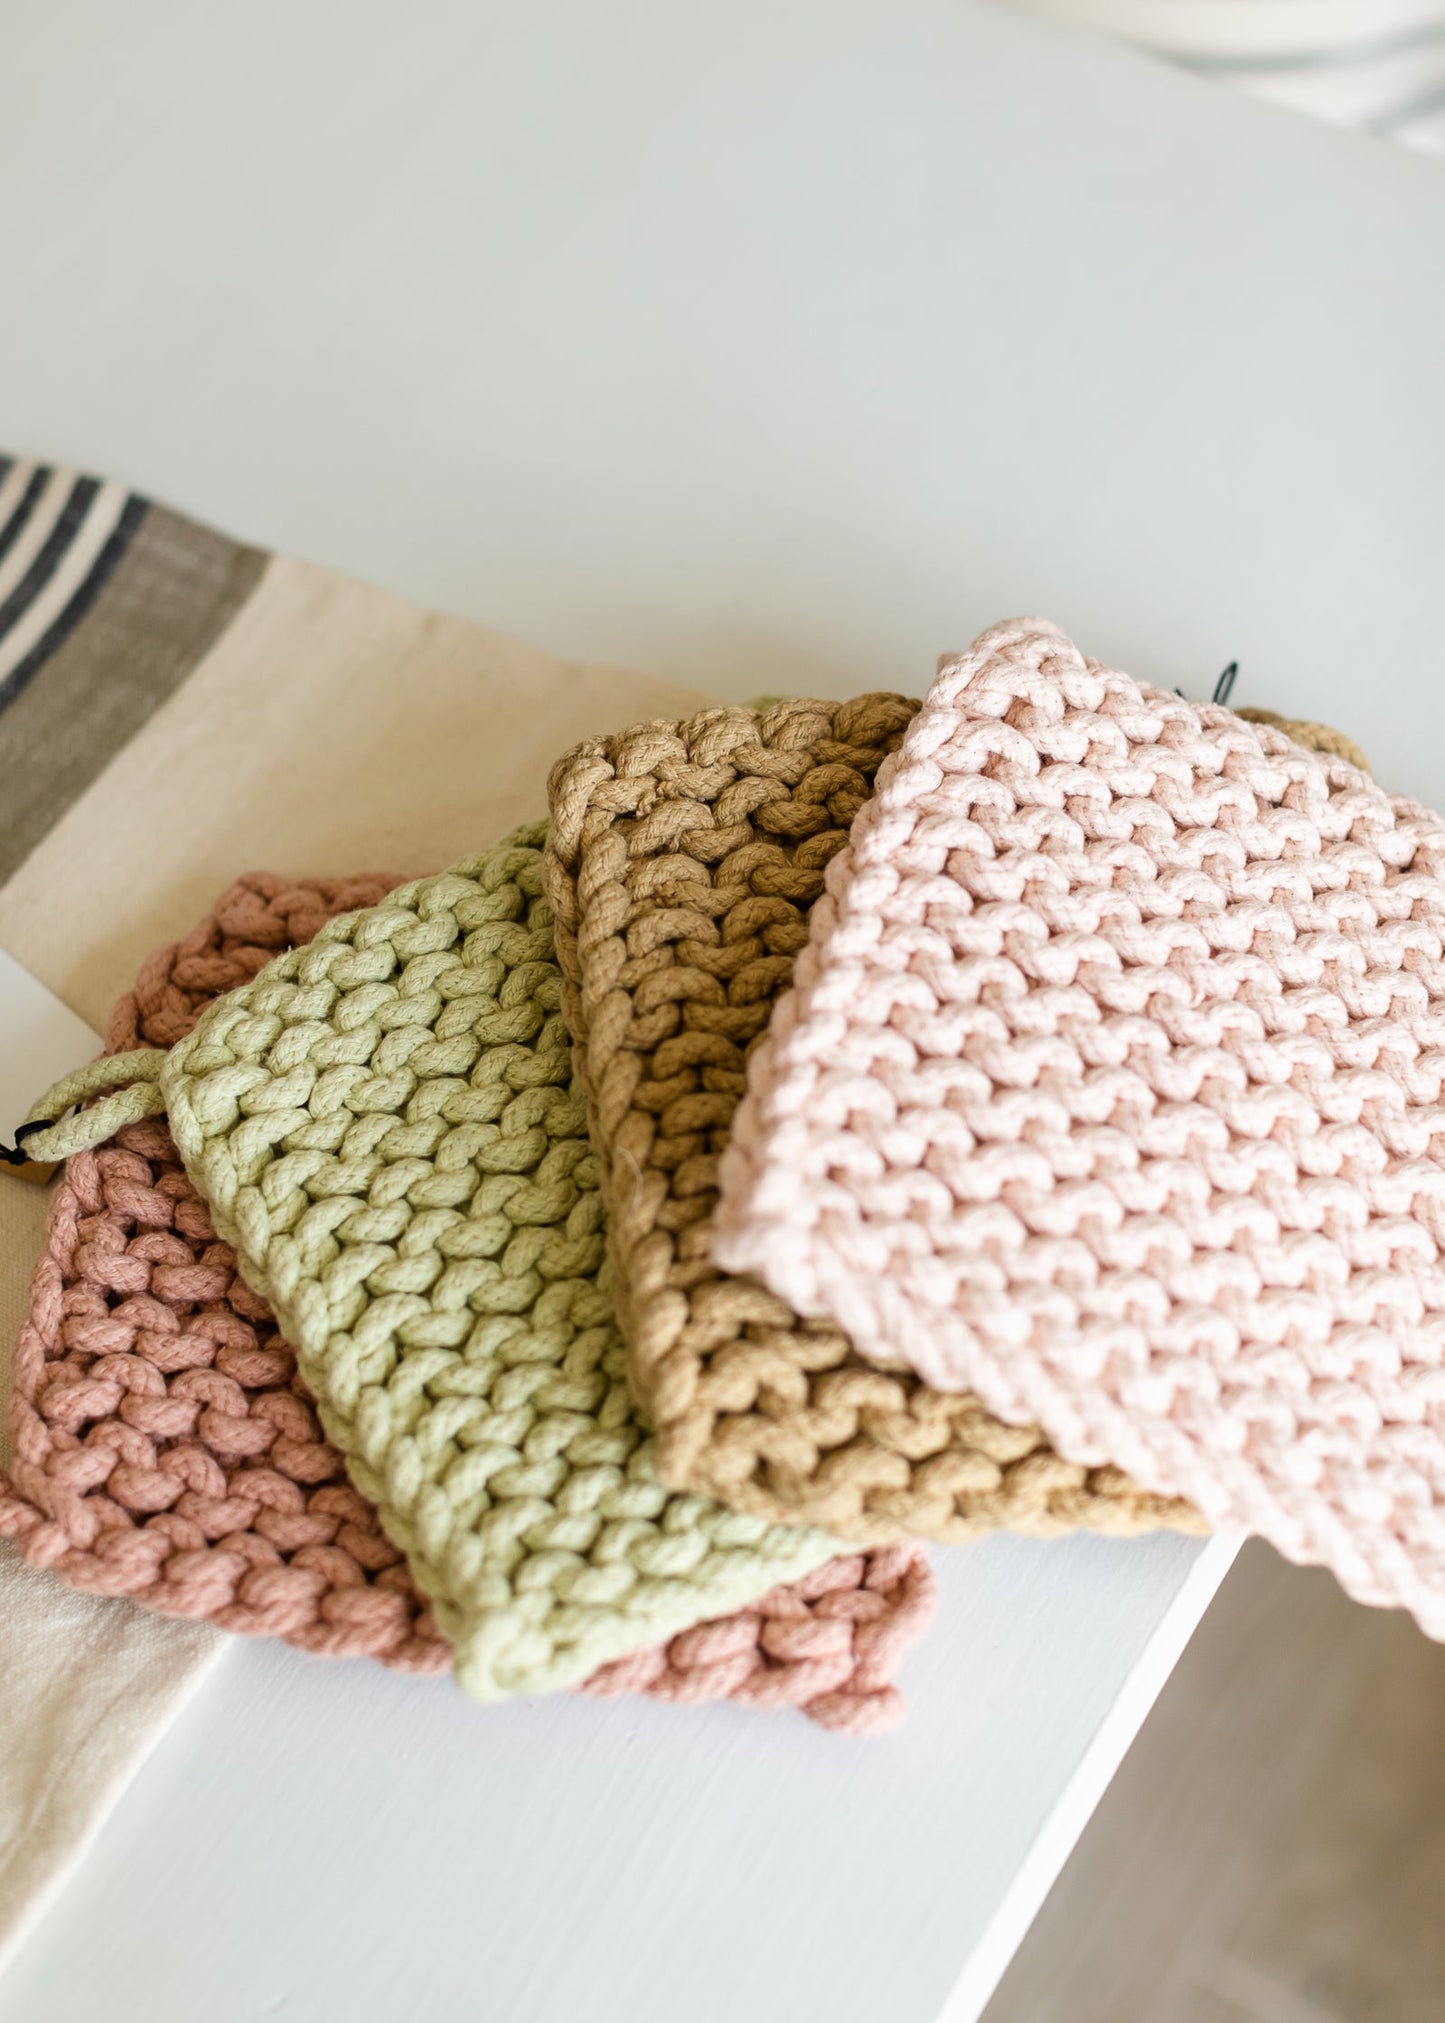 Square Cotton Crocheted Potholders